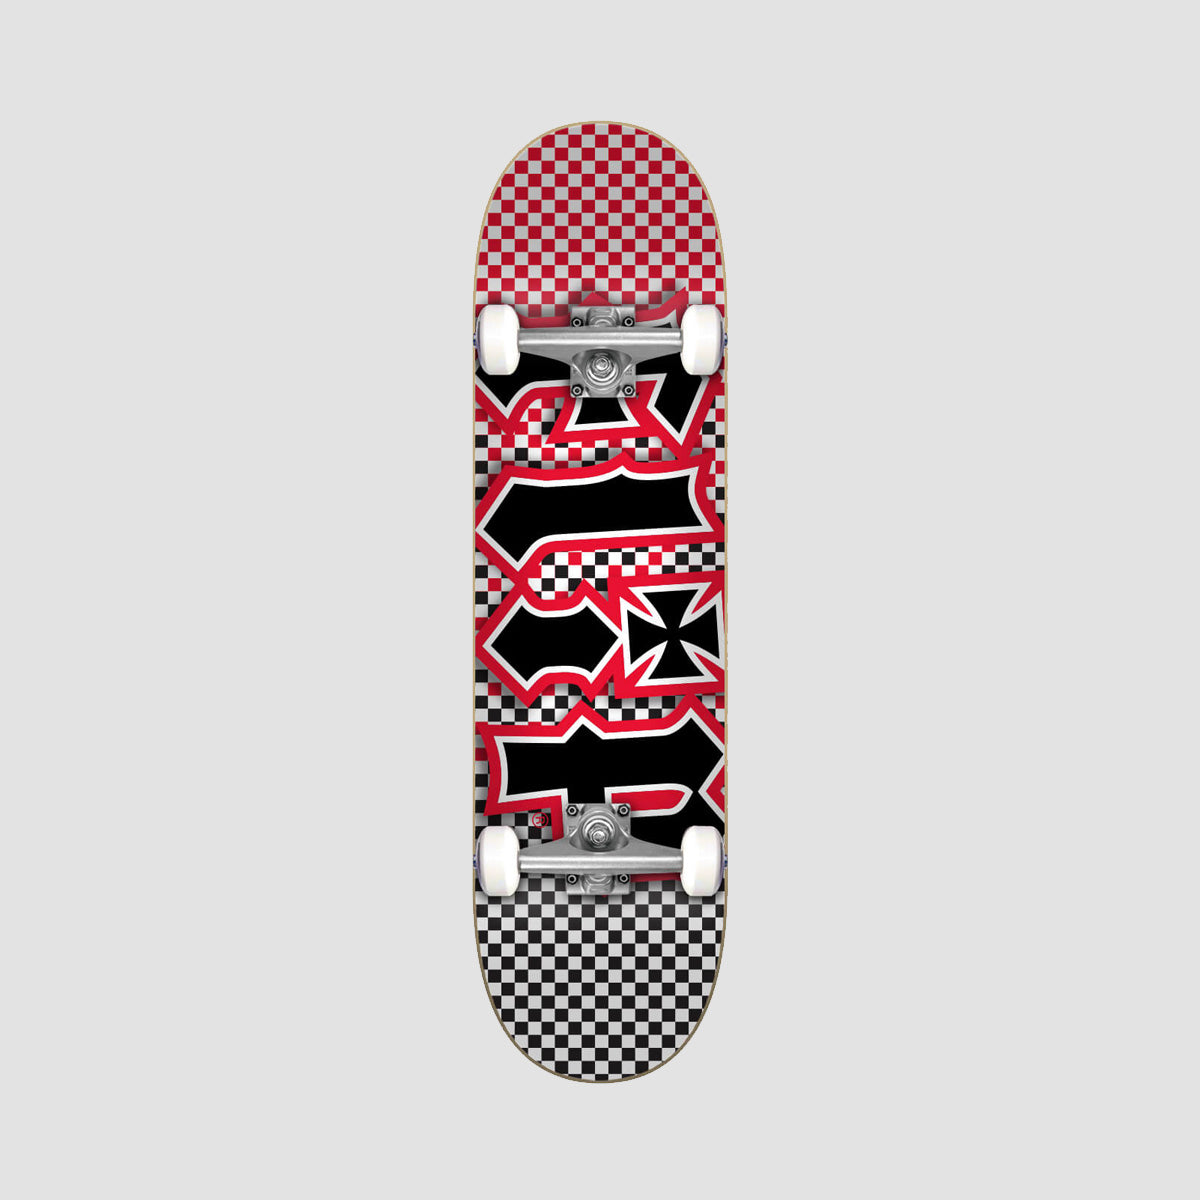 Flip HKD Fast Times Skateboard Red - 7.87"